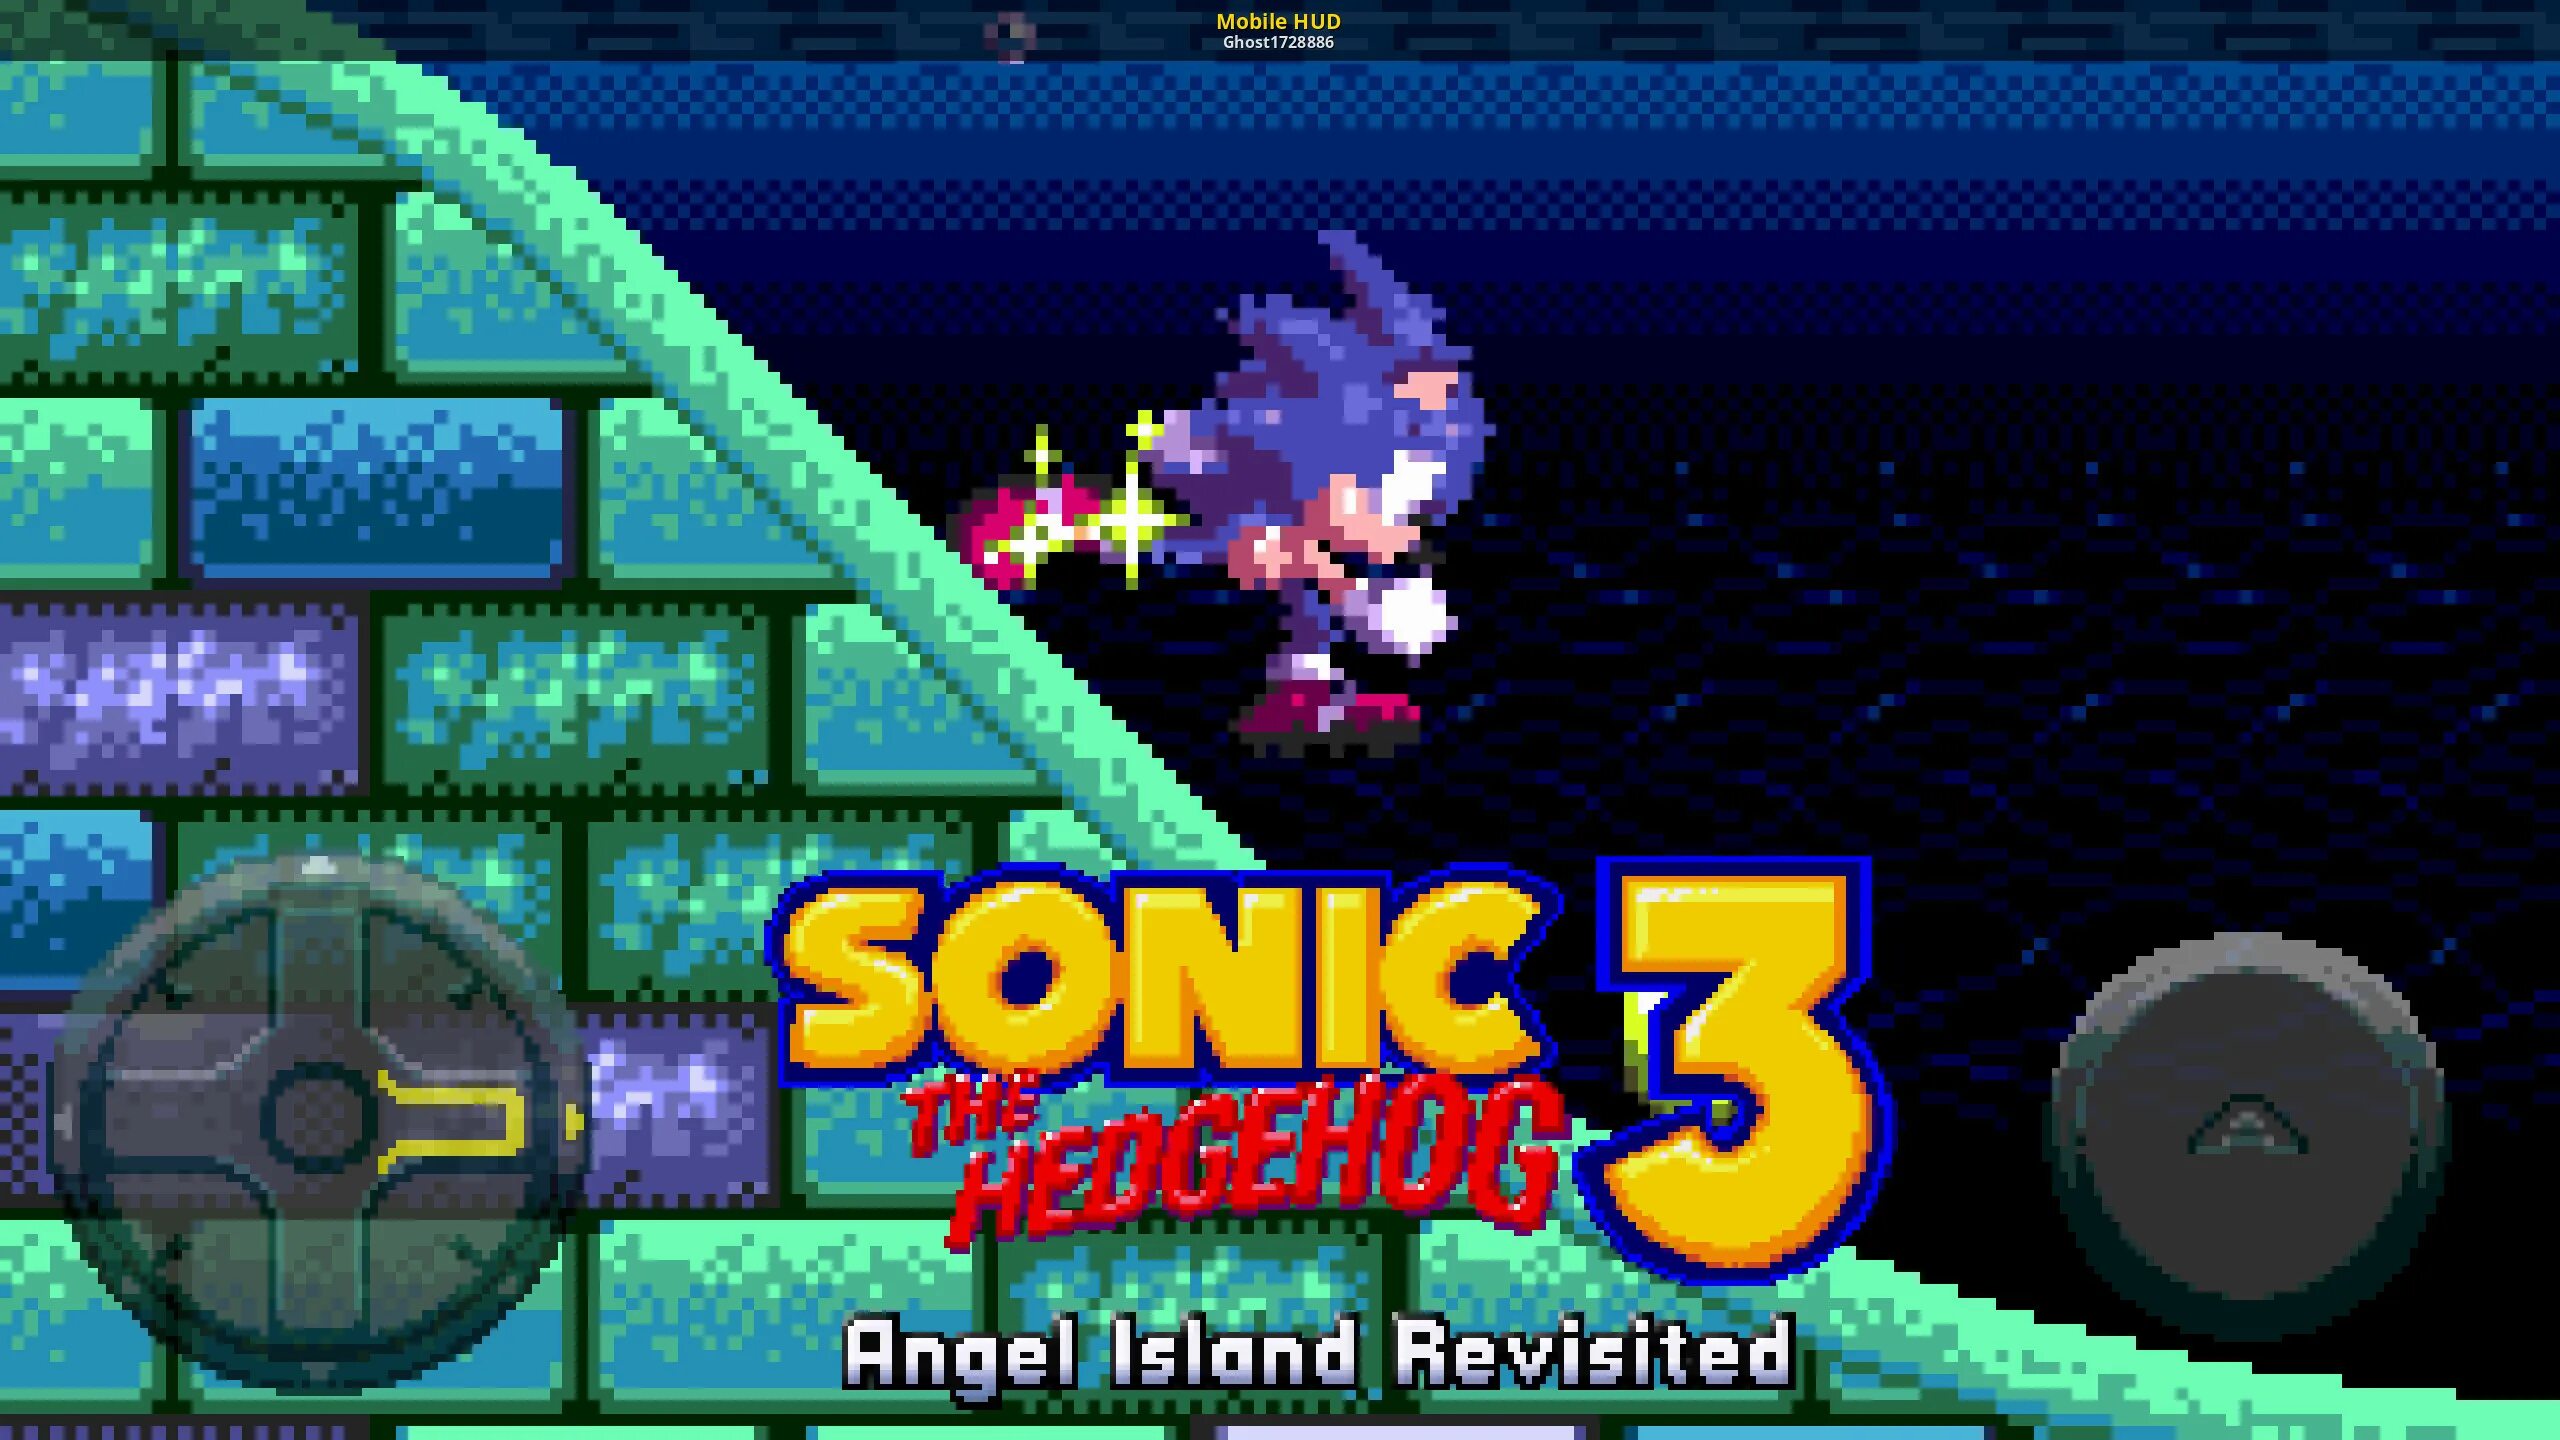 Play sonic 3. Sonic 3 Air HUD. Sonic 3 Air manual. Sonic 3 a.i.r Android. Sonic 3 Air Mania.